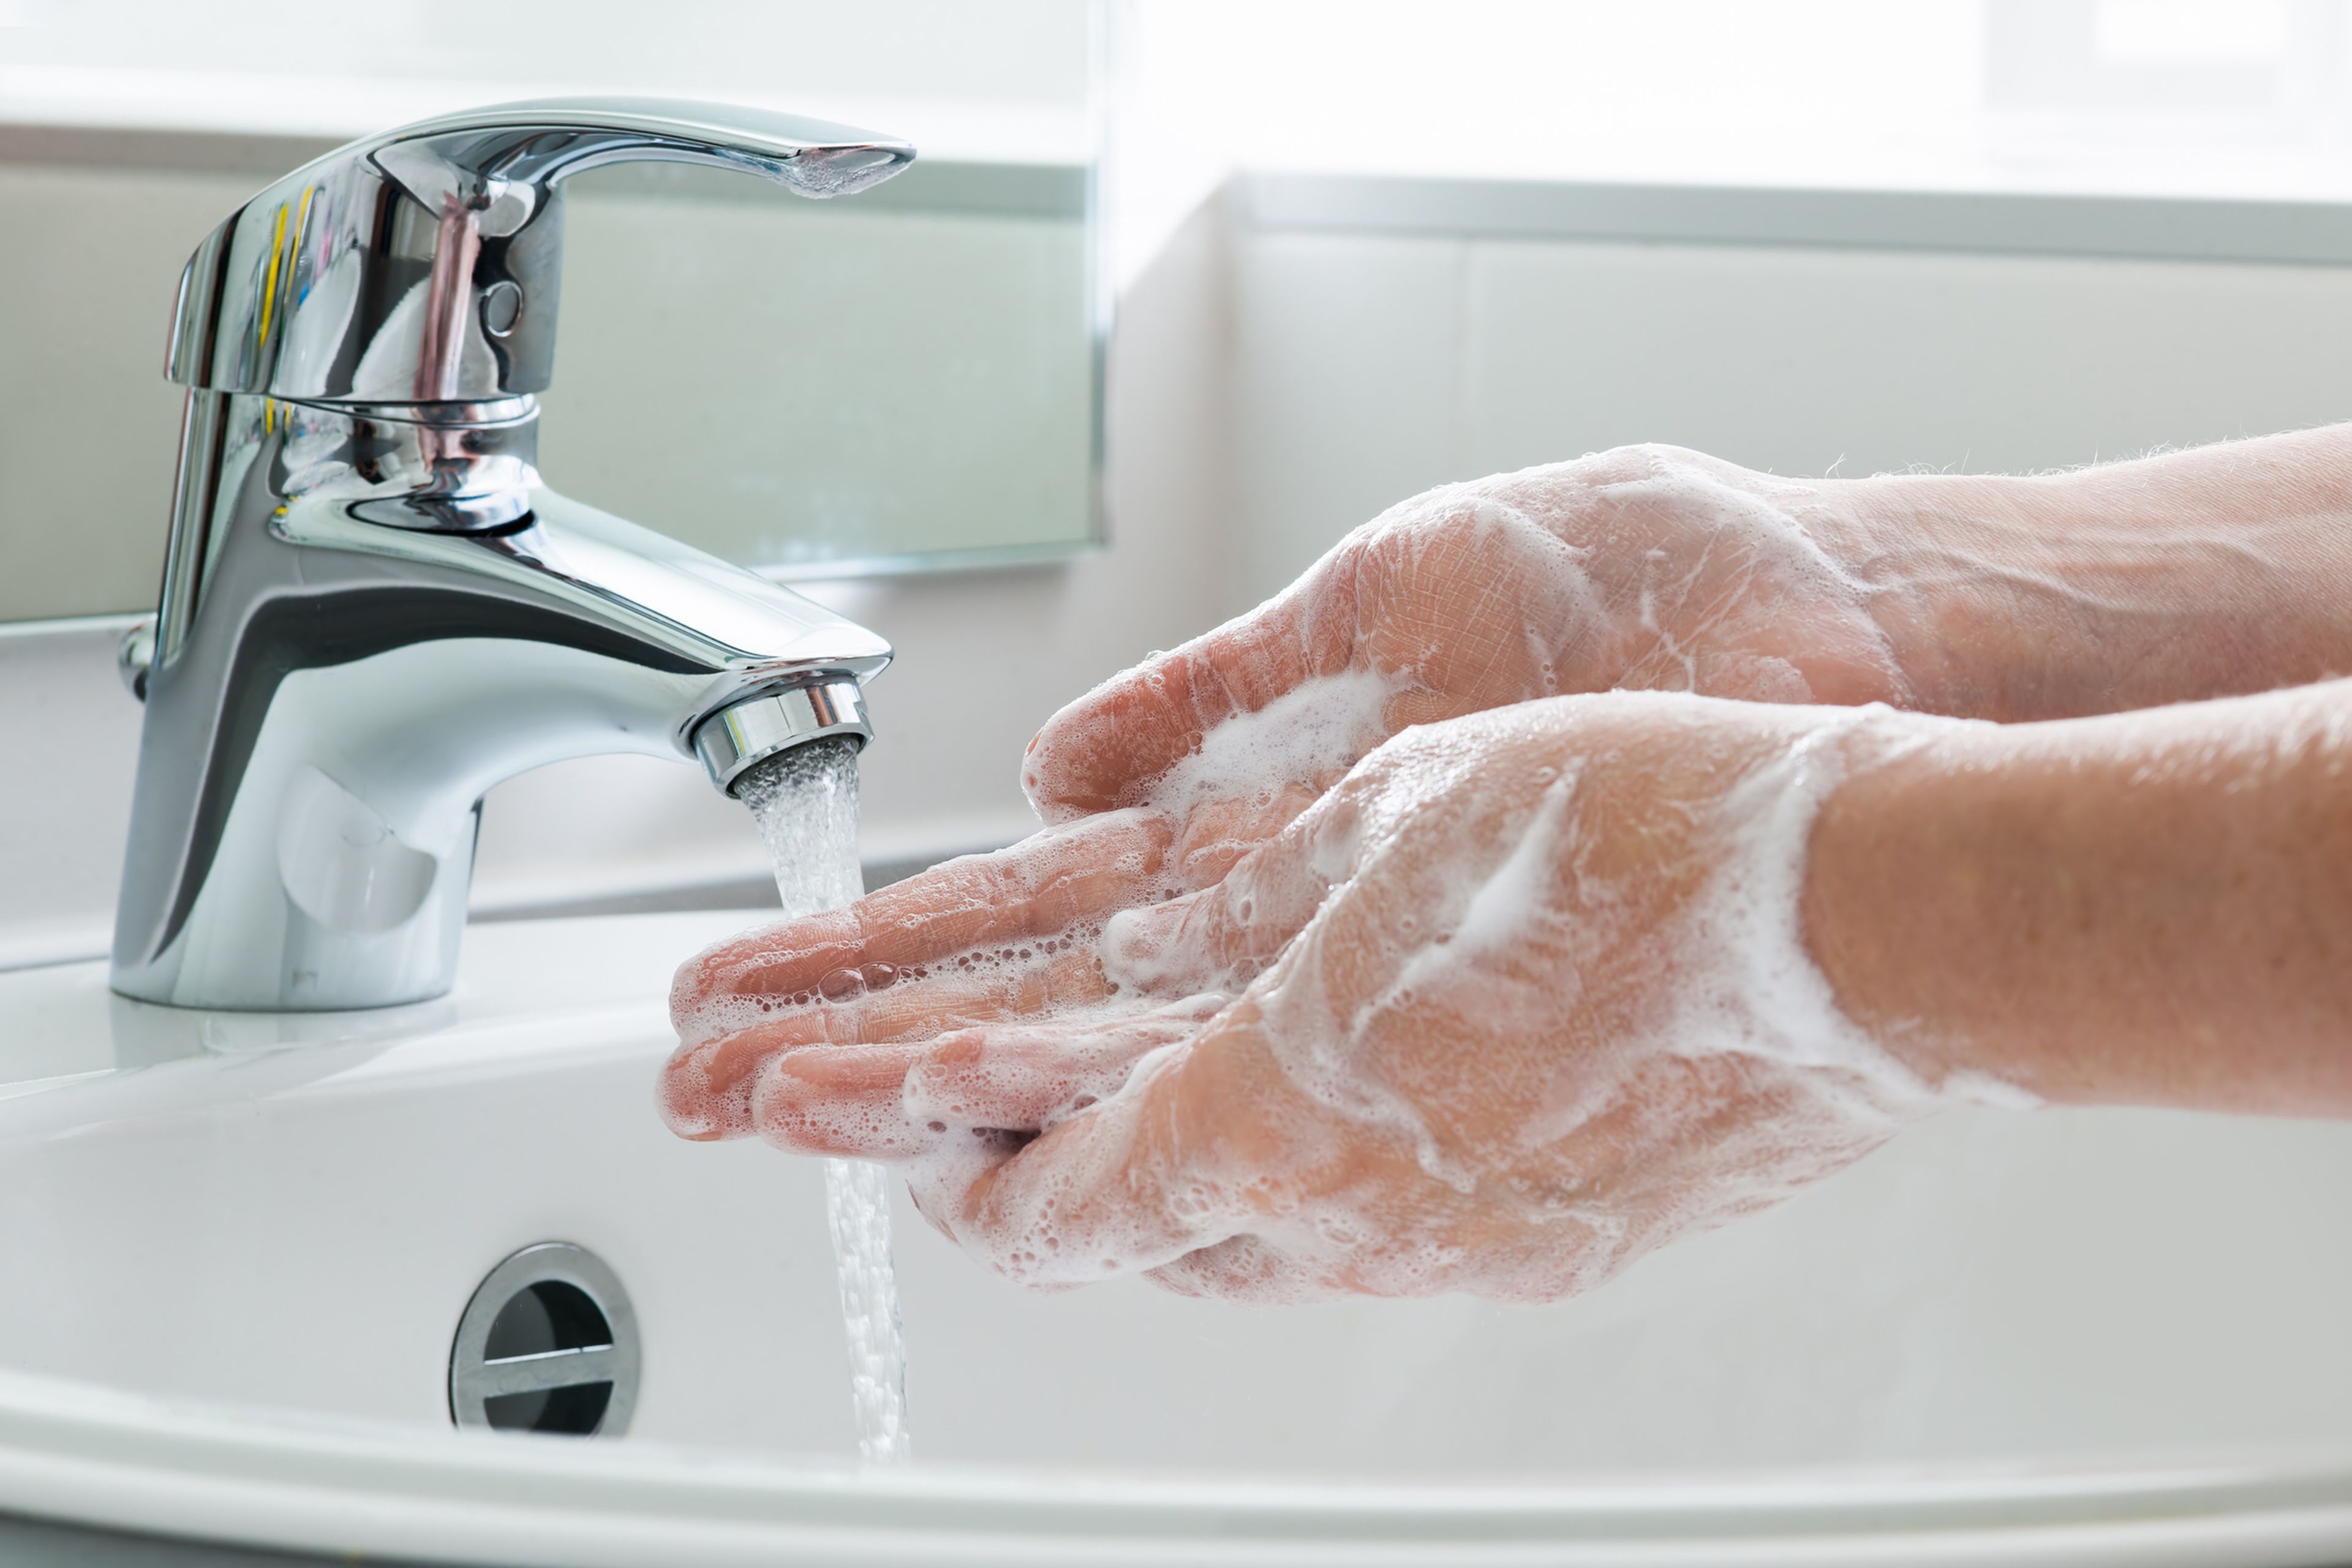 Jabón: lavarse las manos